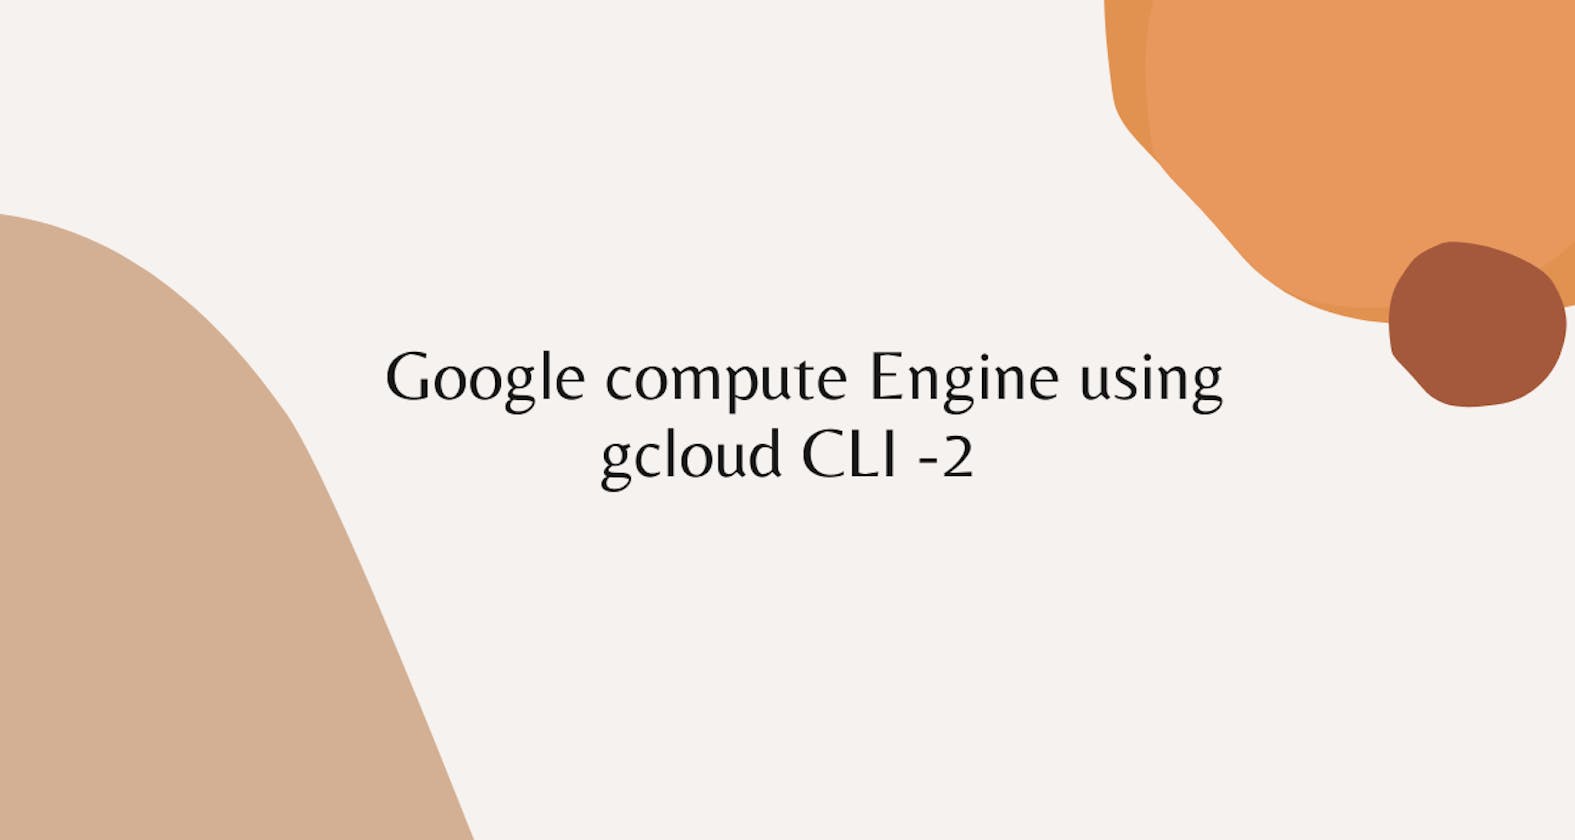 Google compute Engine using gcloud CLI -2